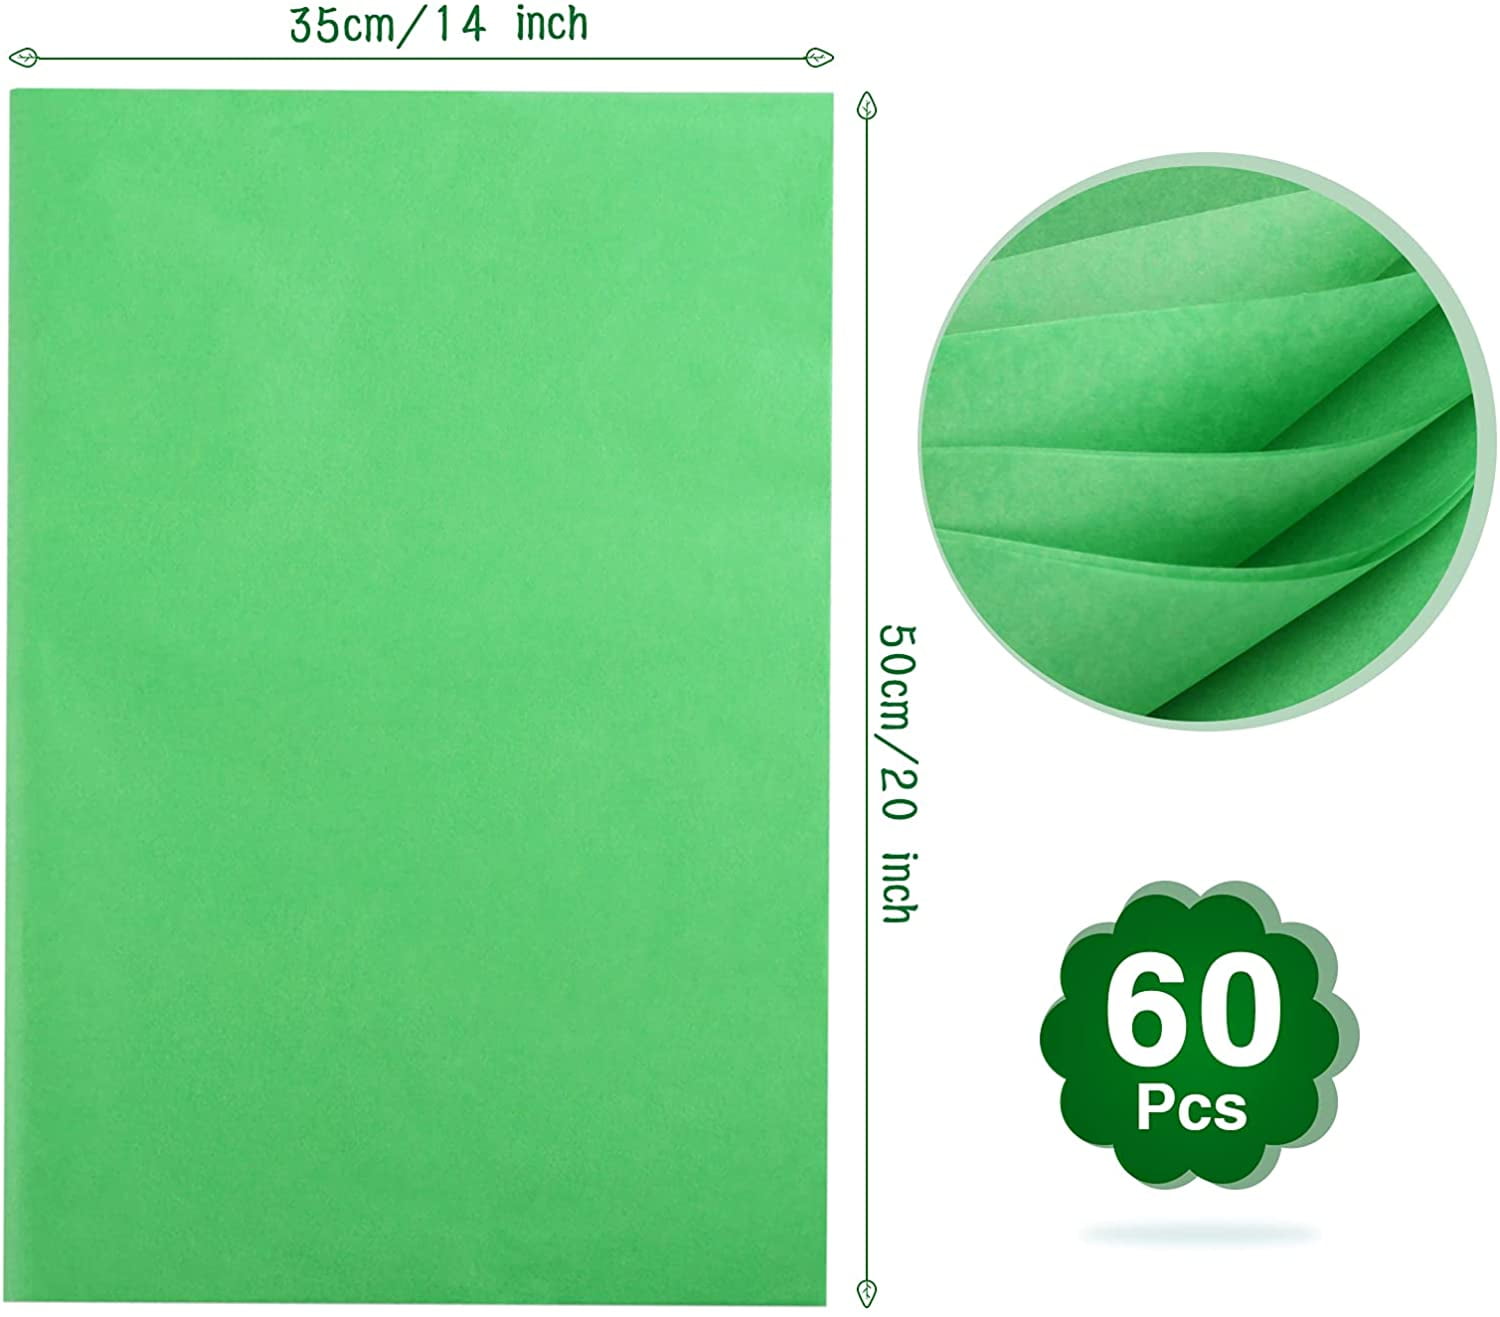  PLULON 60 Sheets Orange Green White Tissue Paper Bulks